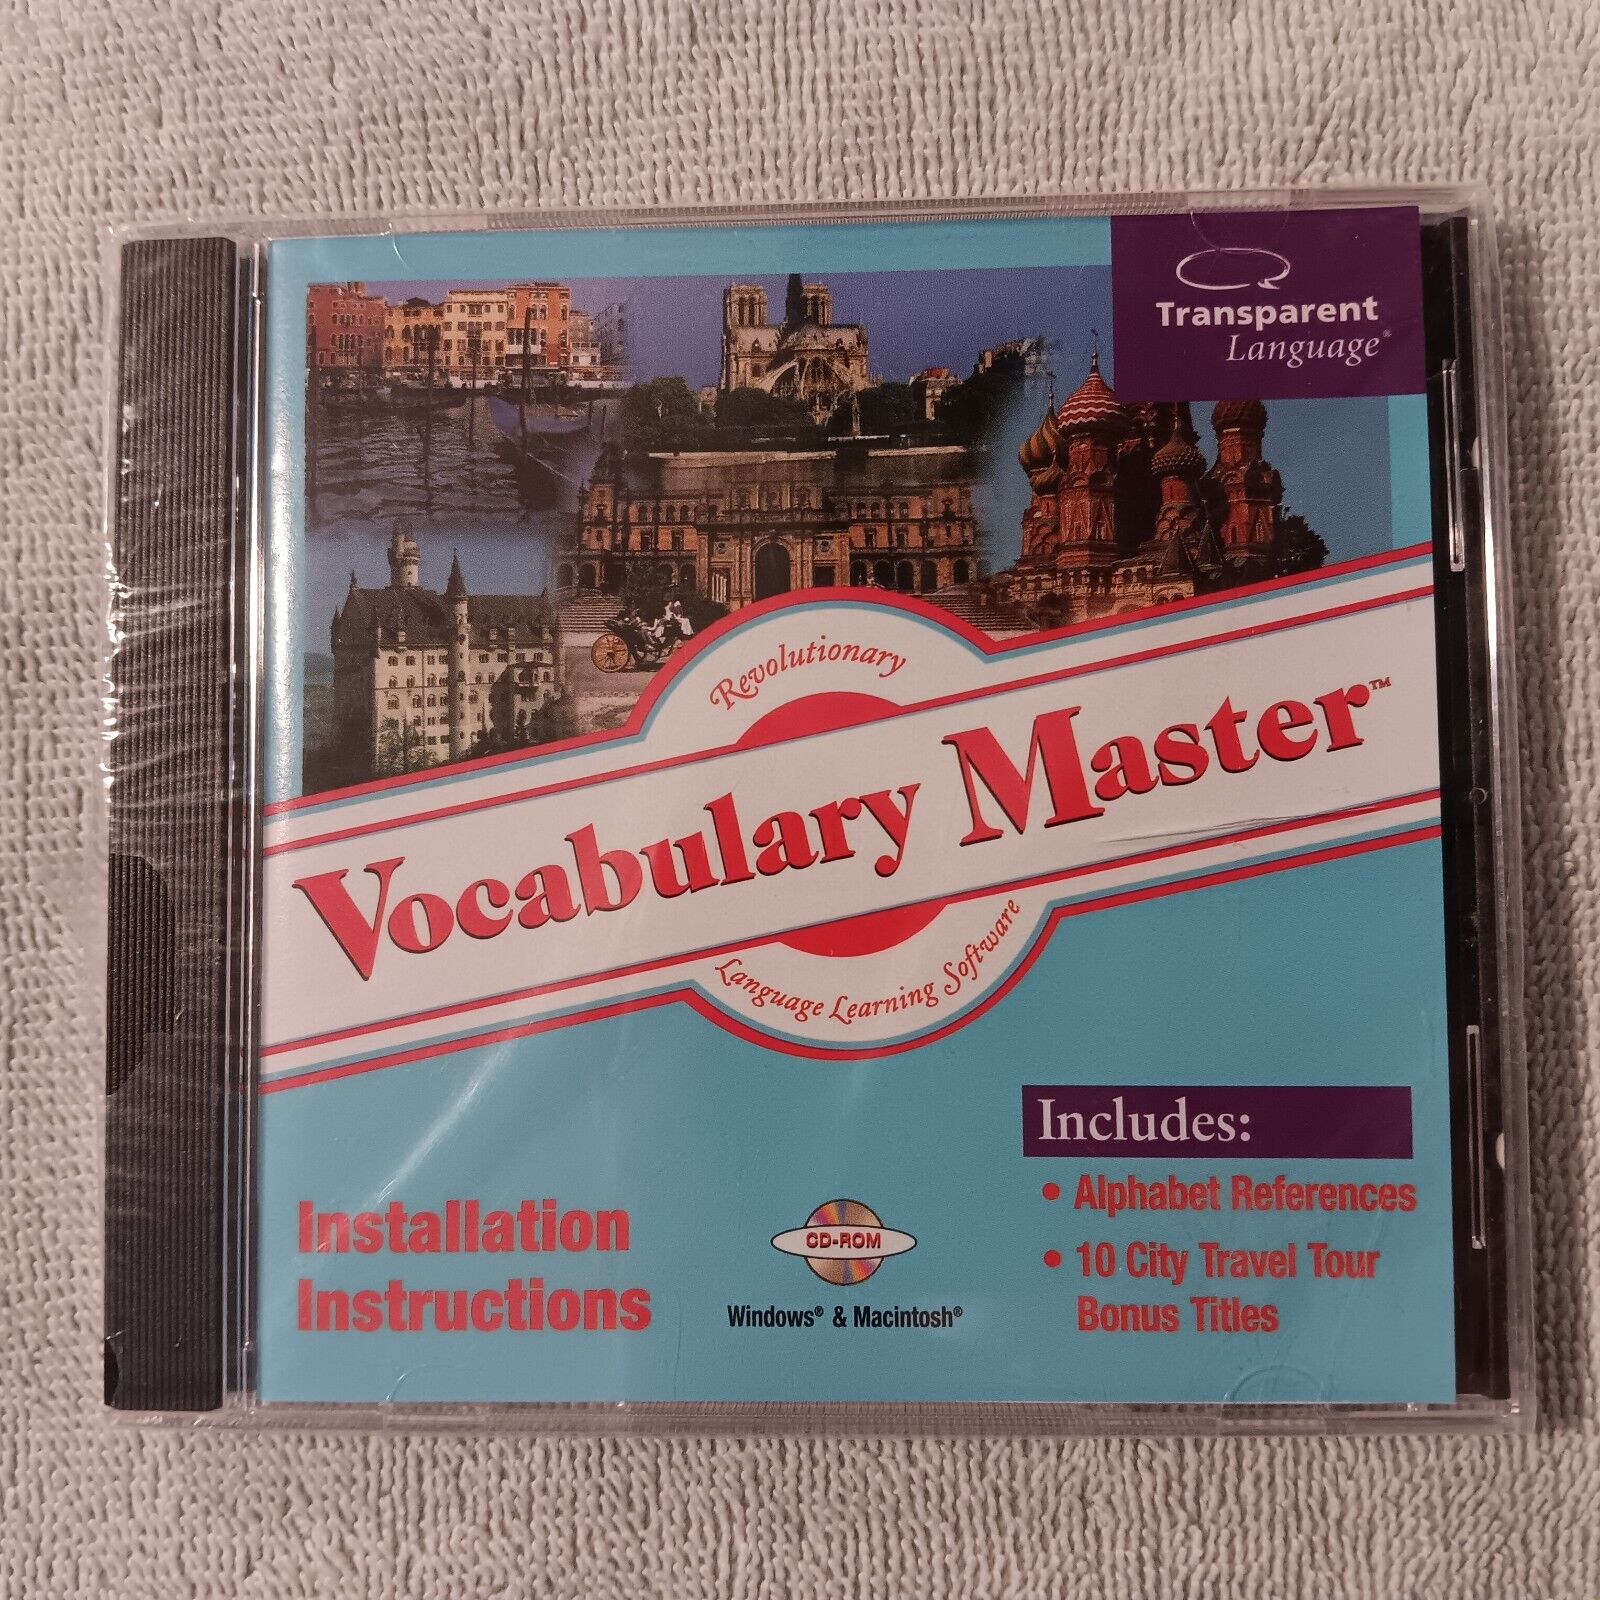 Vocabulary Master: Transparent Language (CD, Win/Mac) New Sealed 